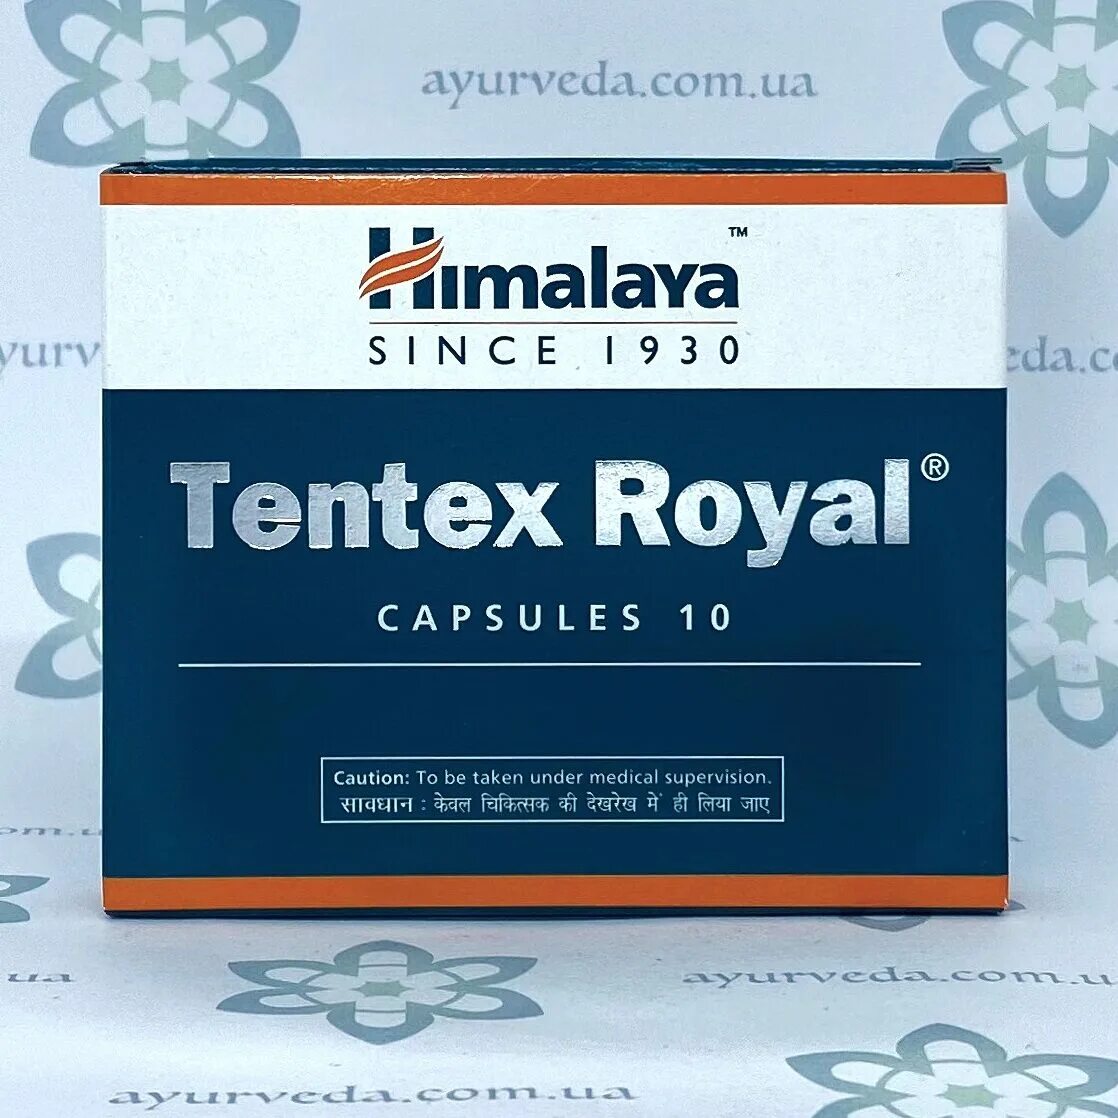 Роял гималаи. Тентекс Роял Хималая. Тентекс Роял для потенции 10 таб. (Tentex Royal) Himalaya. Tentex Royal 10 кап (Индия). Tentex Royal 10 caps/Pack.